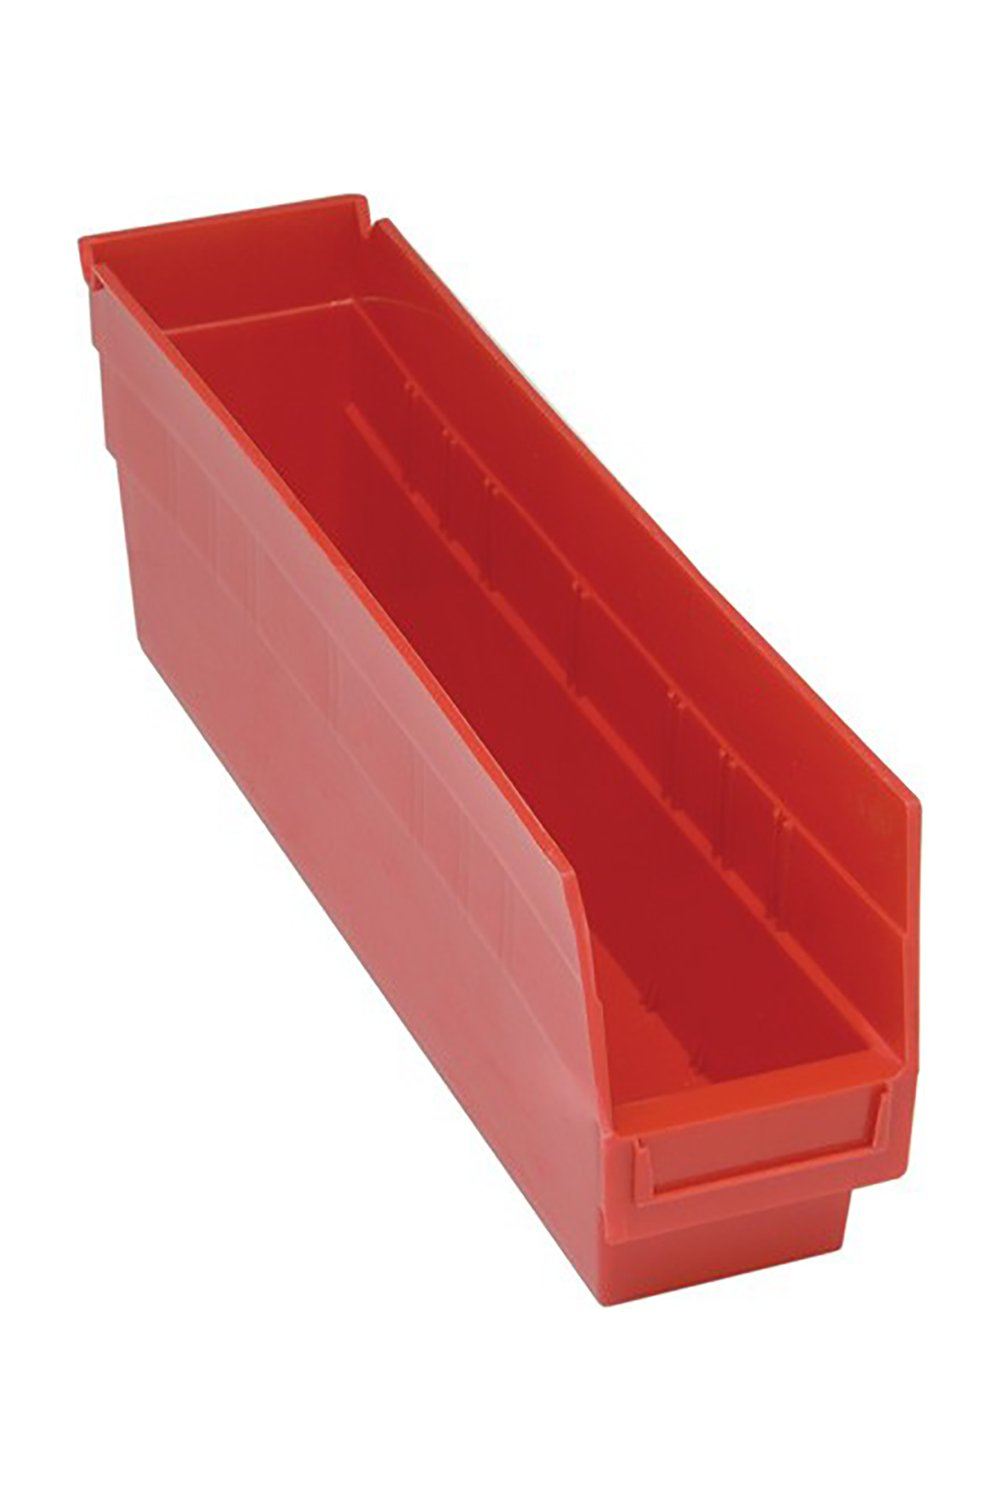 Shelf Bin for 18"D Shelves Bins & Containers Acart 17-7/8'' x 4-1/8'' x 6'' Red 